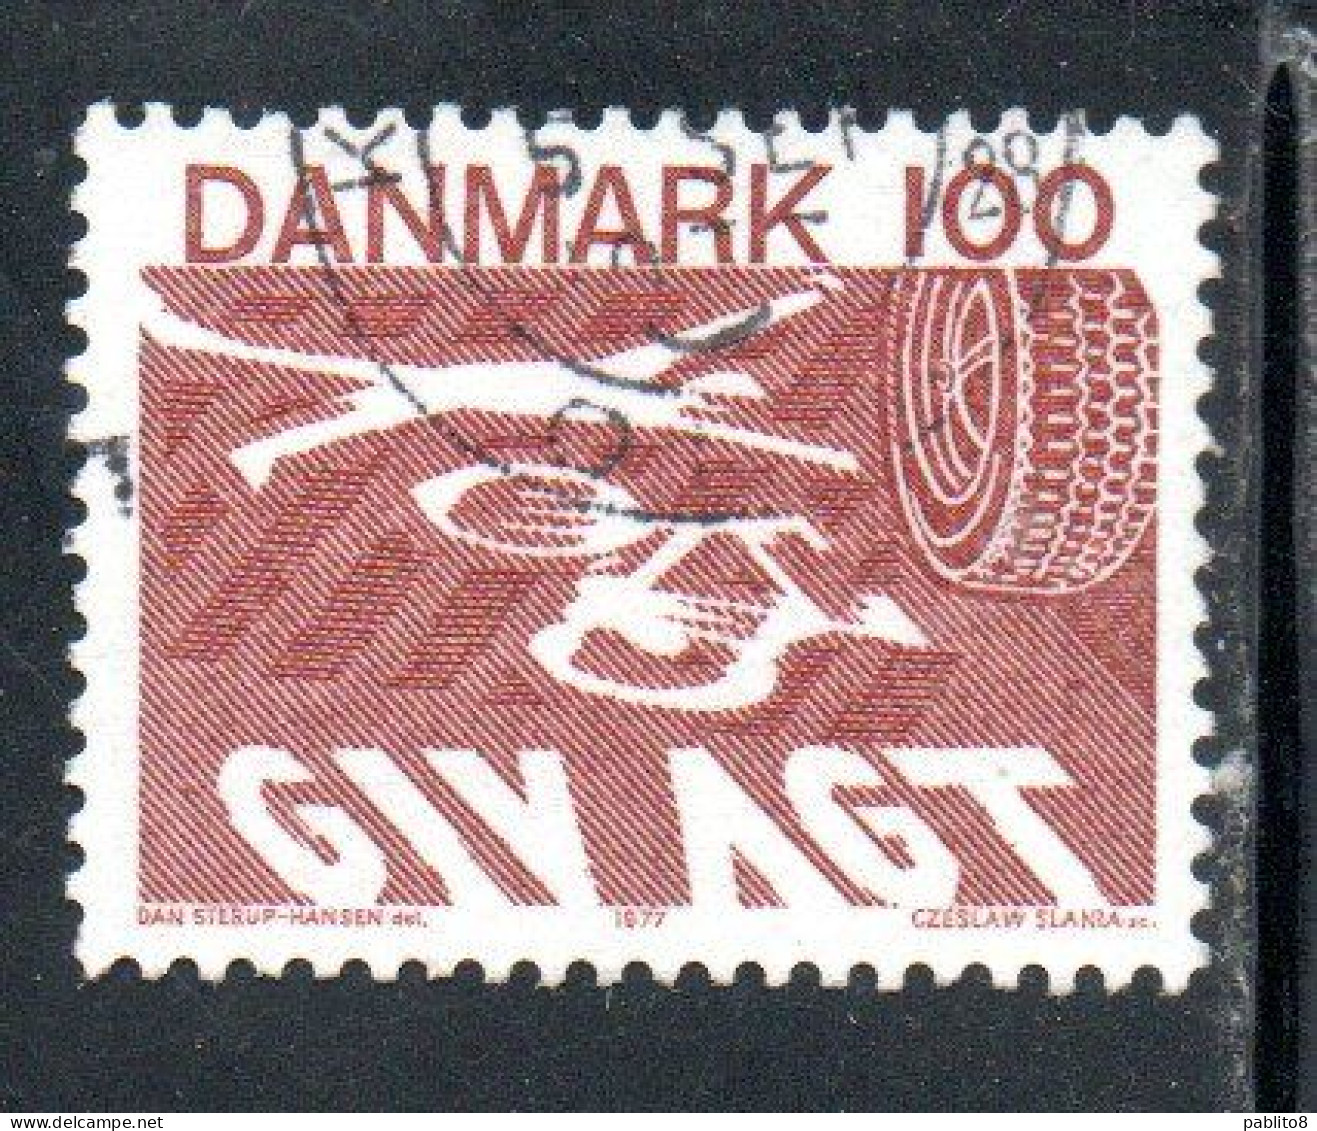 DANEMARK DANMARK DENMARK DANIMARCA 1976 ROAD SAFETY TRAFFIC ACT ACCIDENT 100o USED USATO OBLITERE' - Used Stamps